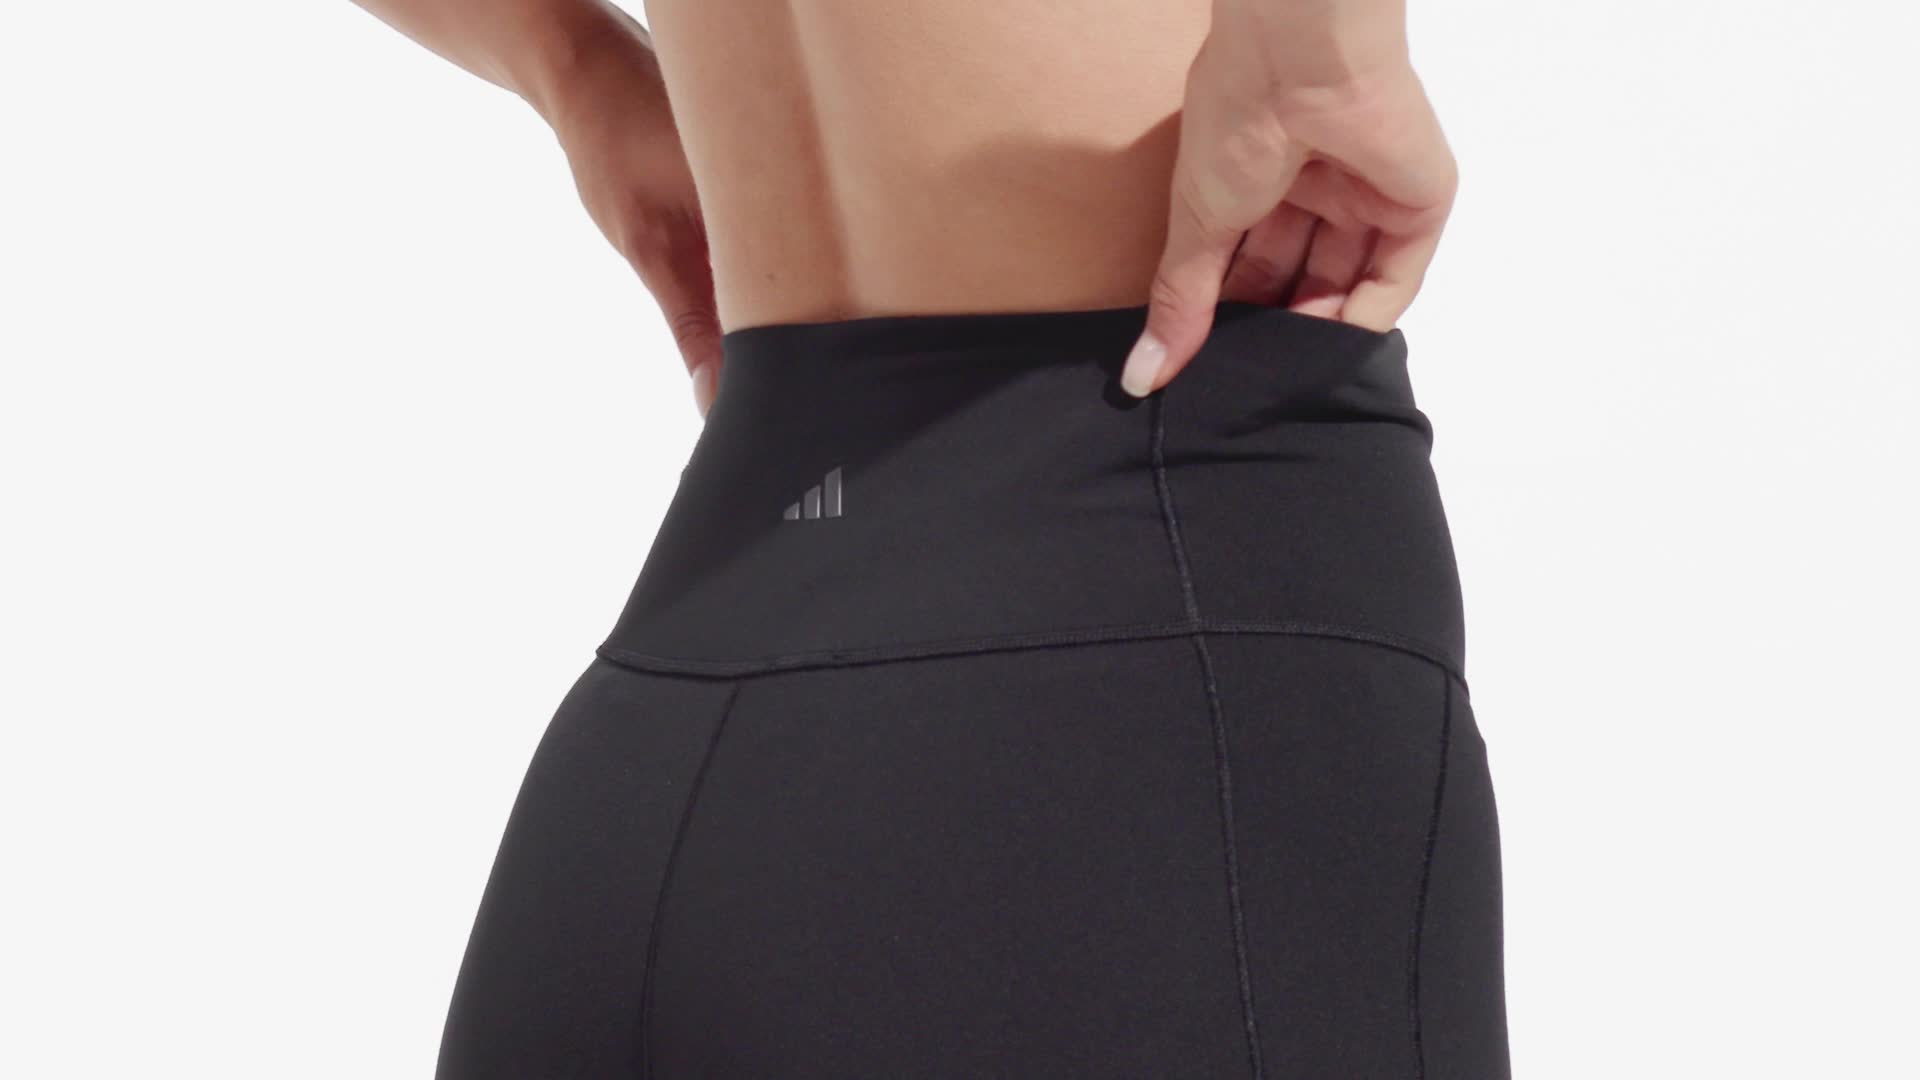 adidas Hot Yoga Tote Bag - Black, Women's Yoga